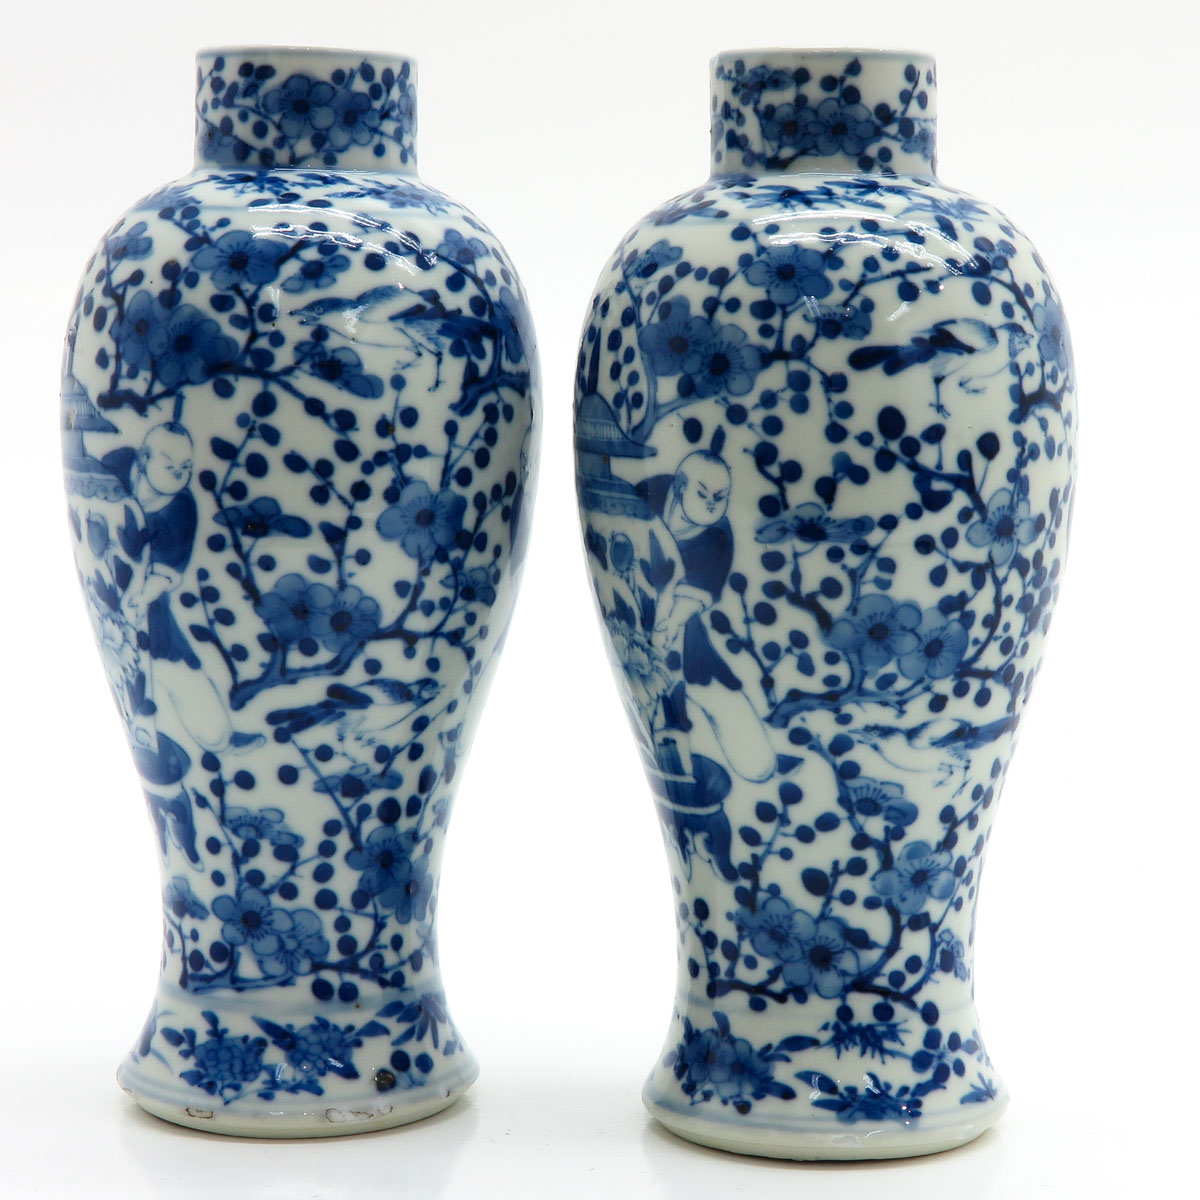 Lot of 2 China Porcelain Vases - Image 4 of 6